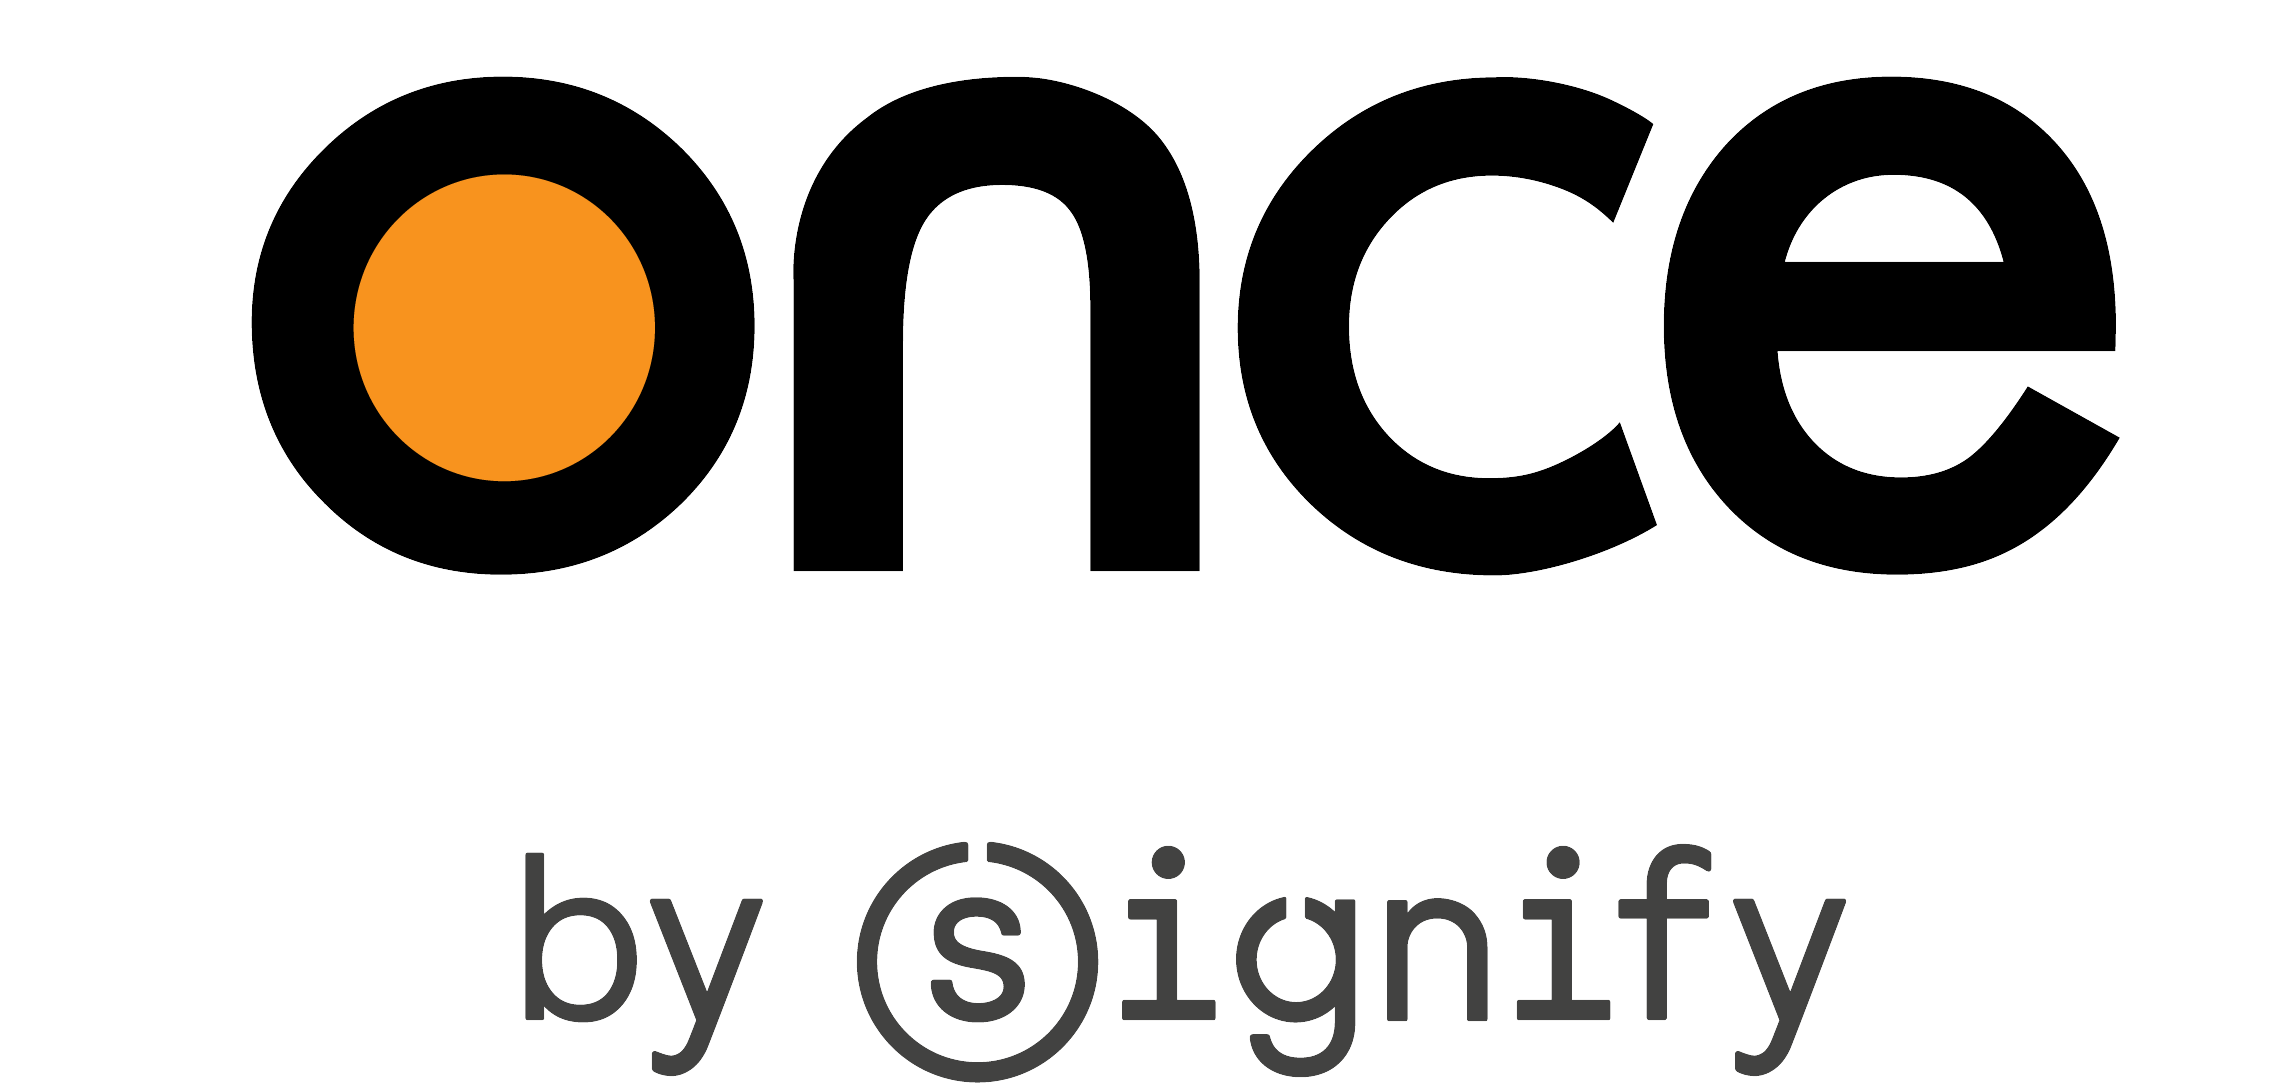 ONCE-Logo-ST-POS-RGB (1).png logo